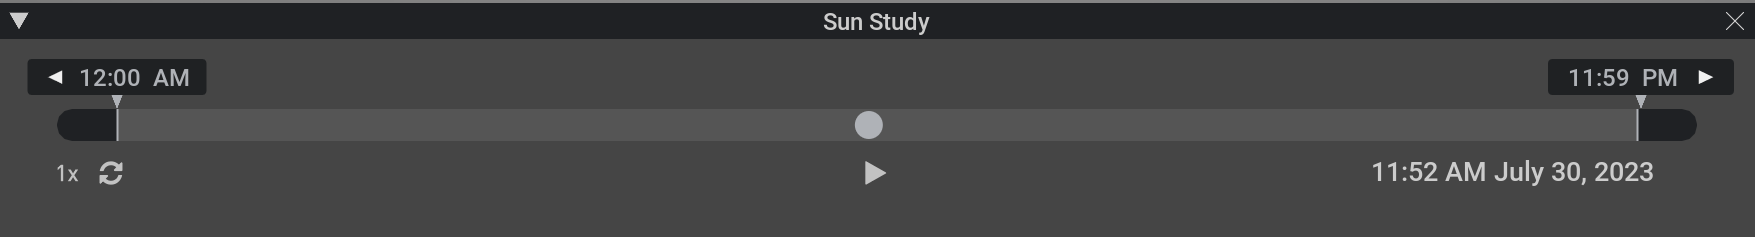 Sun Study Tool